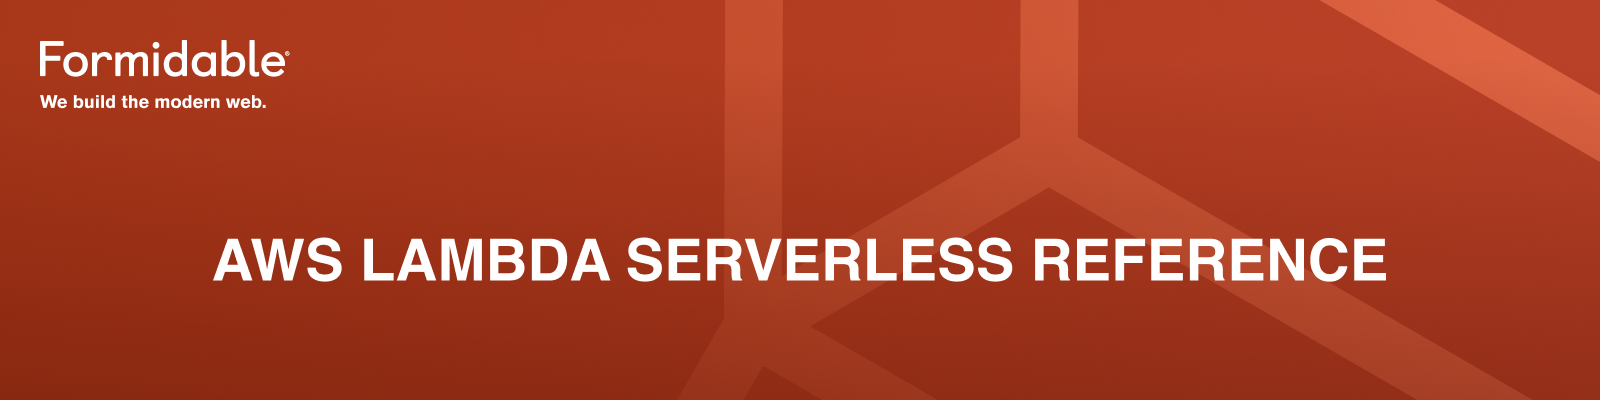 AWS Lambda Serverless Reference — Formidable, We build the modern web